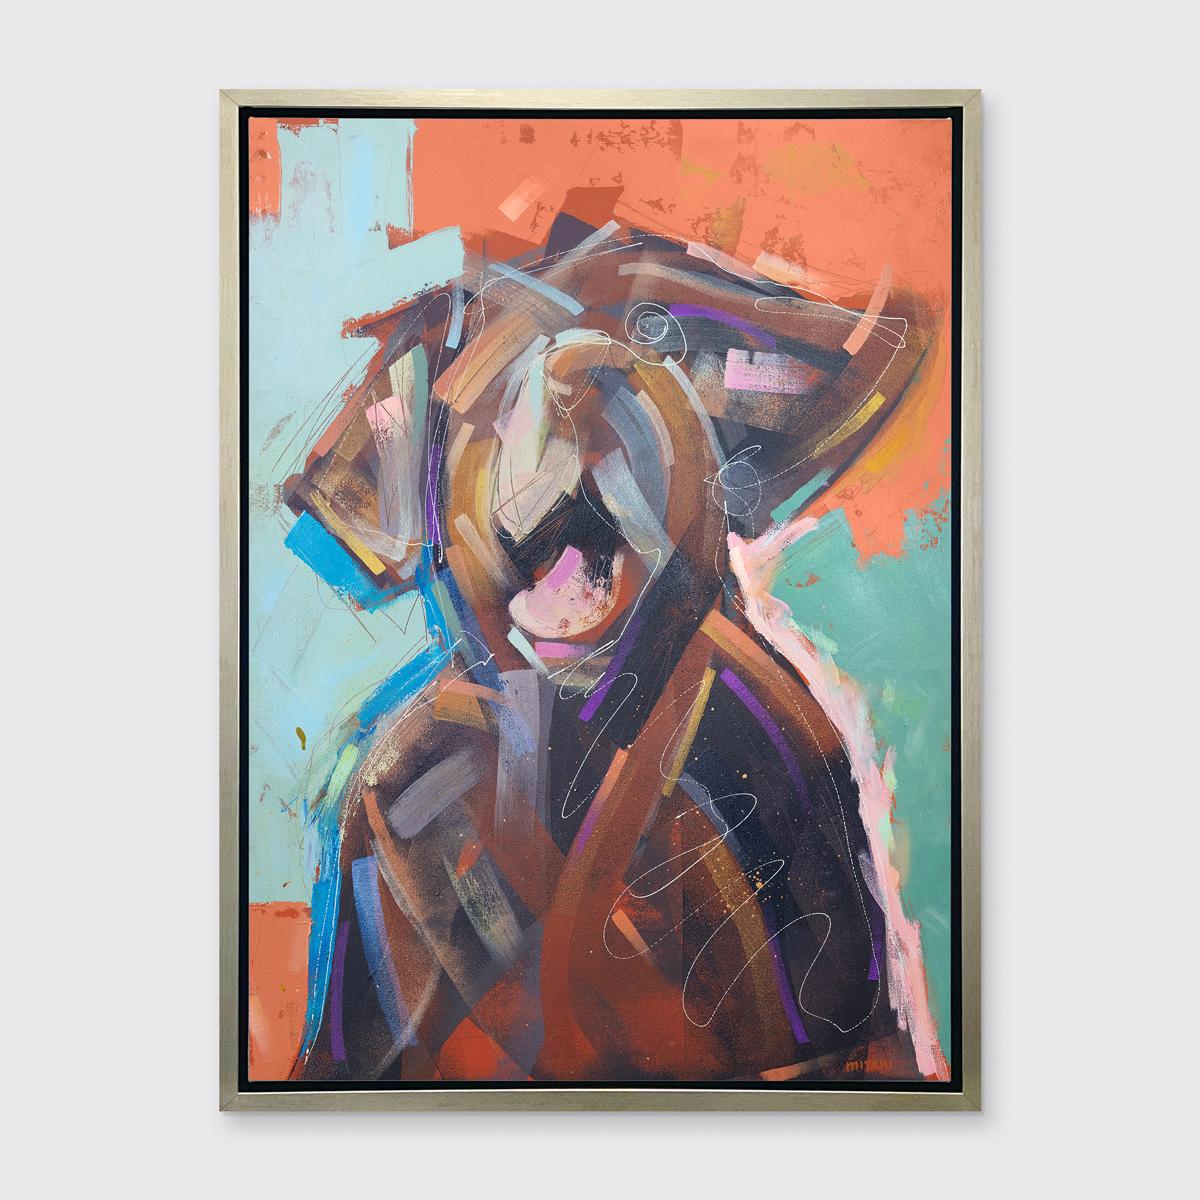 Abstract Print Russell Miyaki - "Brown Lab" Impression giclée à édition limitée, 40" x 30"